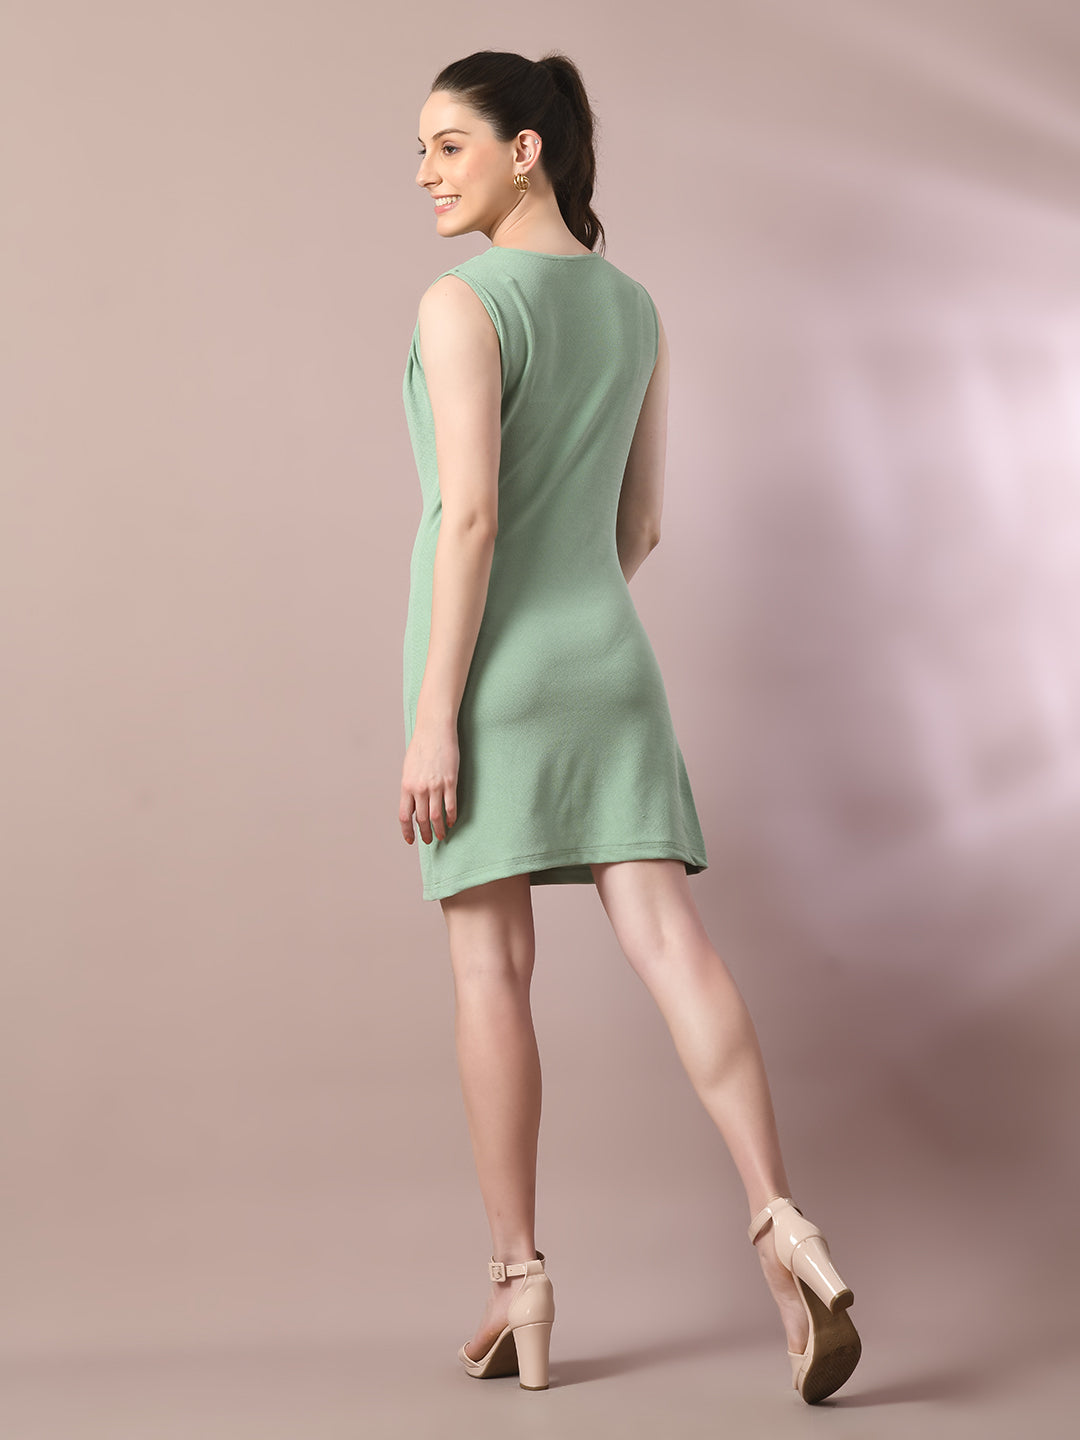 Women's  Sea Green Solid Cowl Neck Bodycon Party Dress  - Myshka